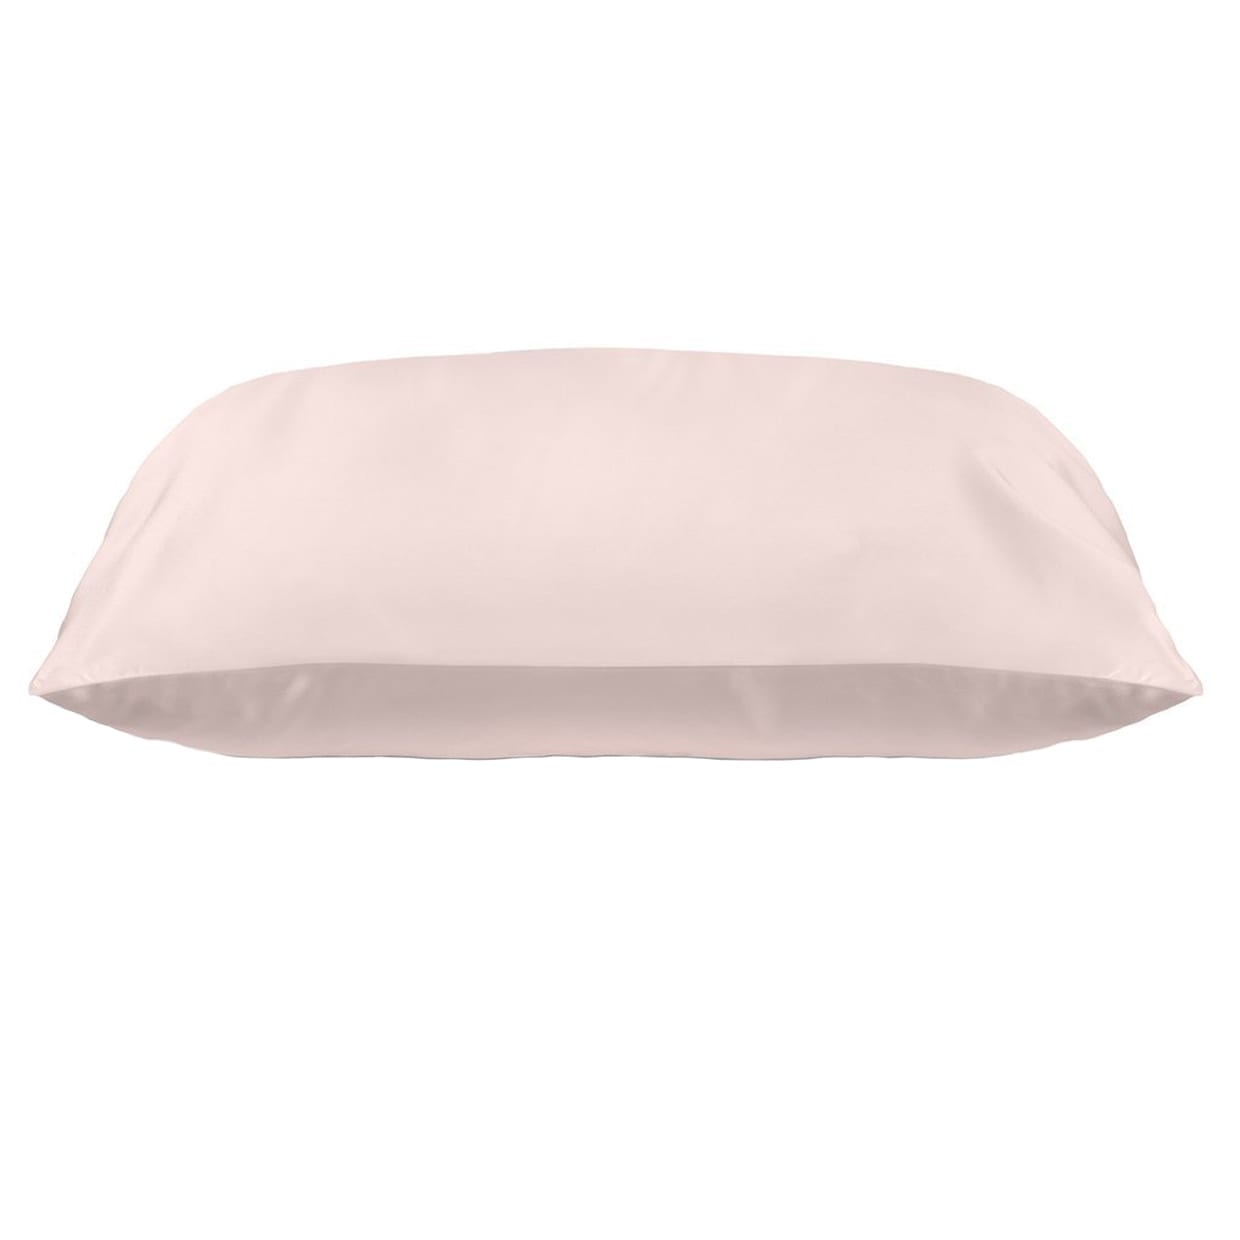 A pink silk pillowcase on white,